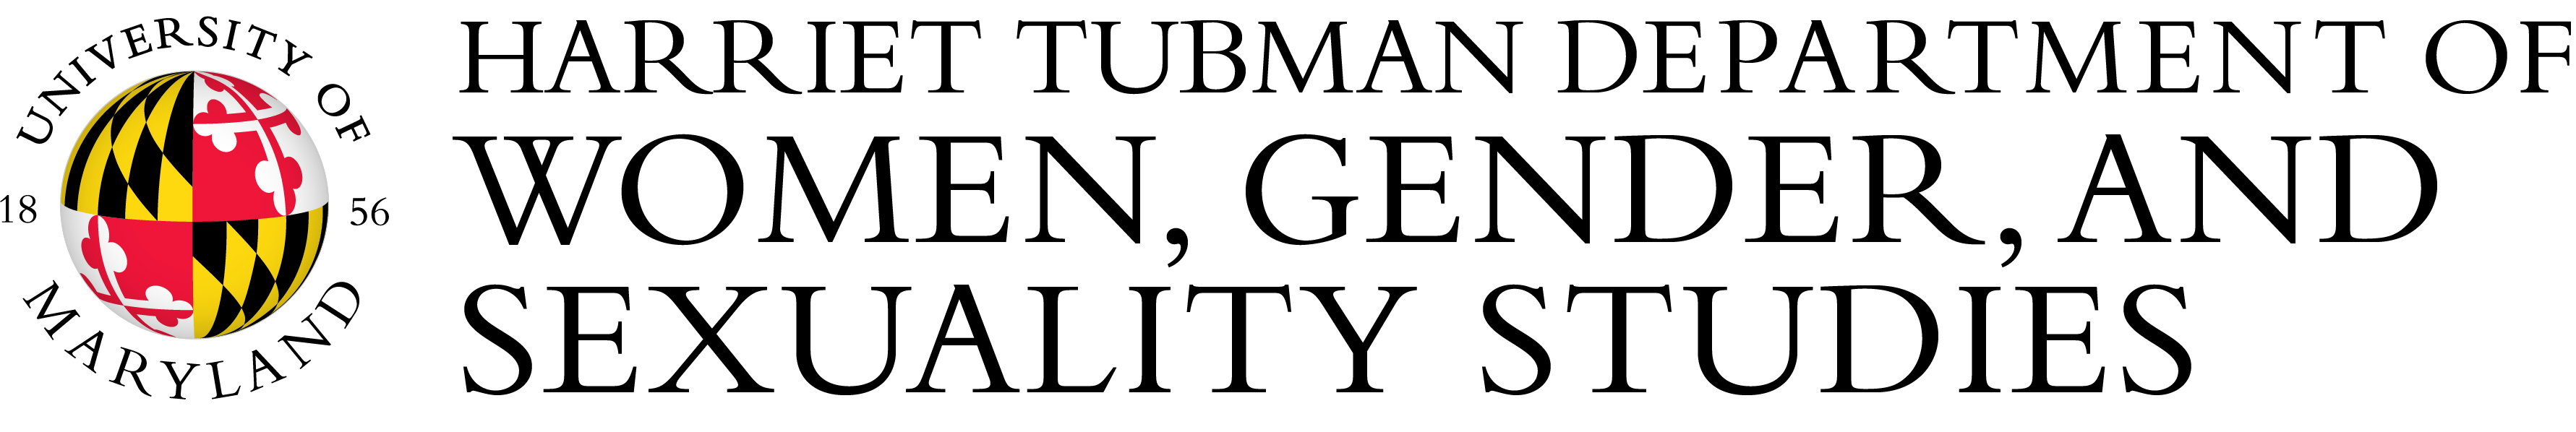 UMD The Harriet Tubman Department of Women, Gender, and Sexuality Studies Logo